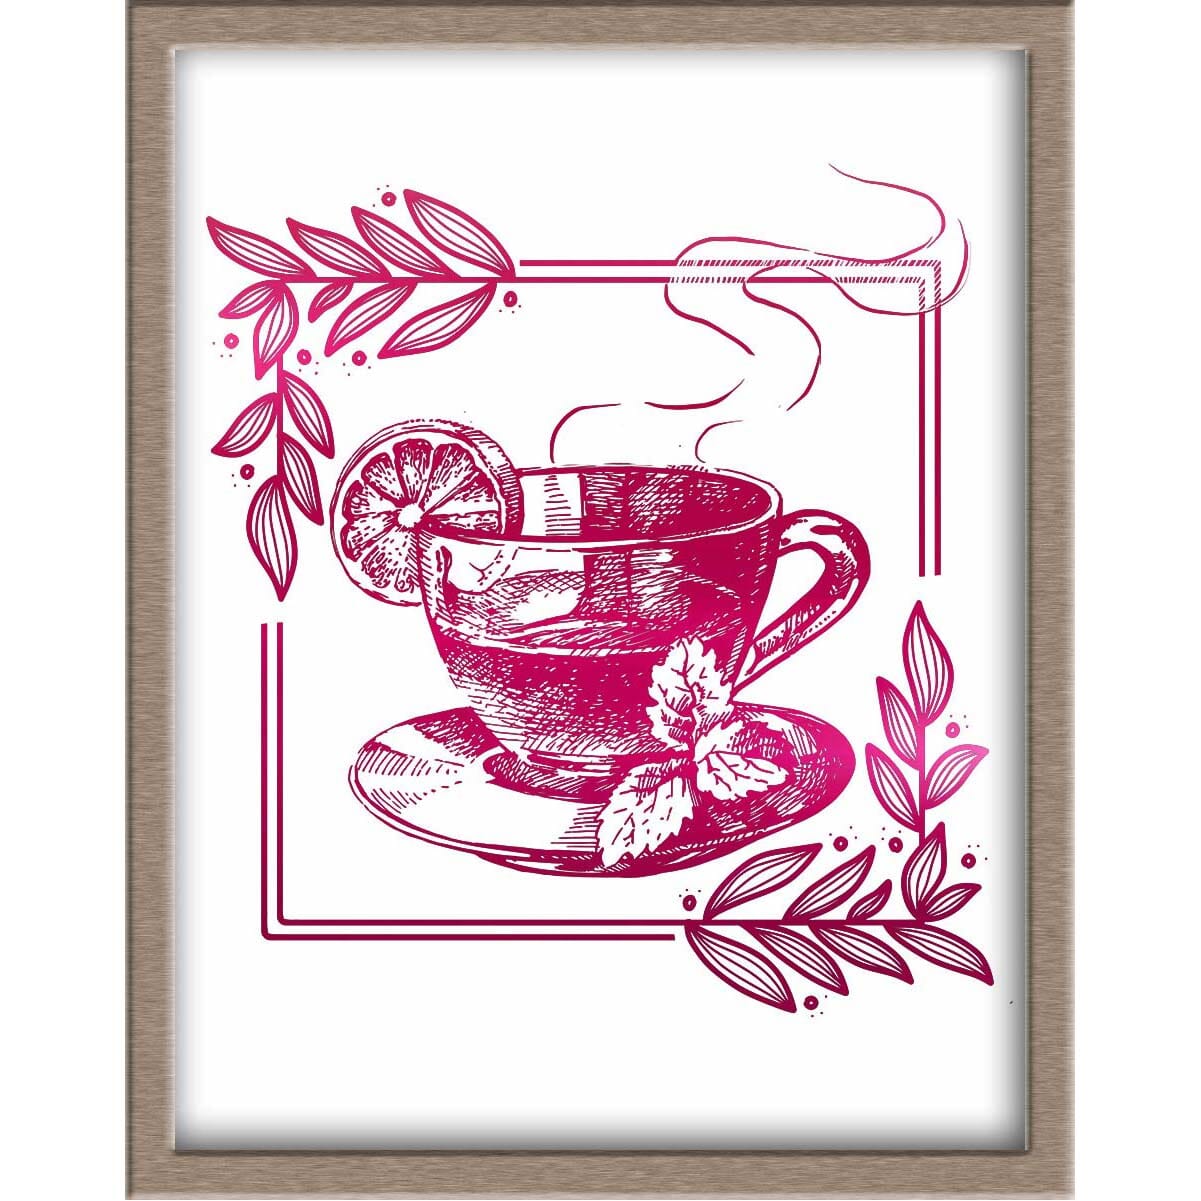 Warm Cup of Tea Foiled Print Posters, Prints, & Visual Artwork JoyousJoyfulJoyness 